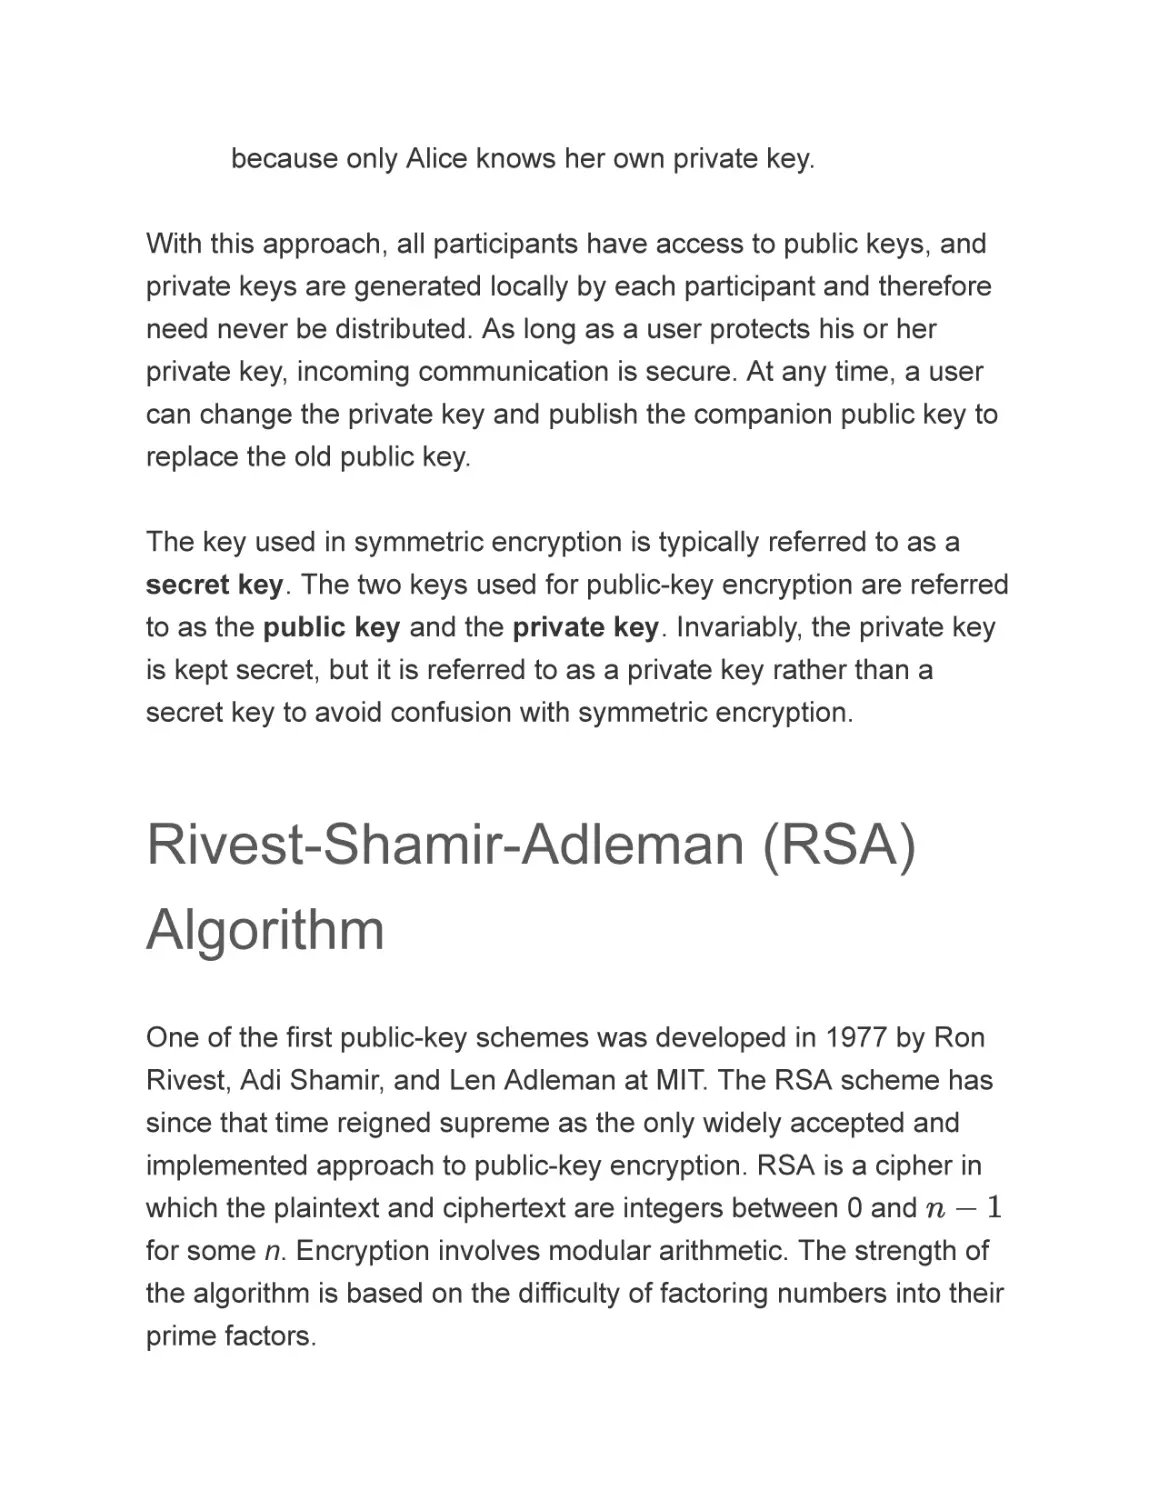 Rivest-Shamir-Adleman (RSA) Algorithm